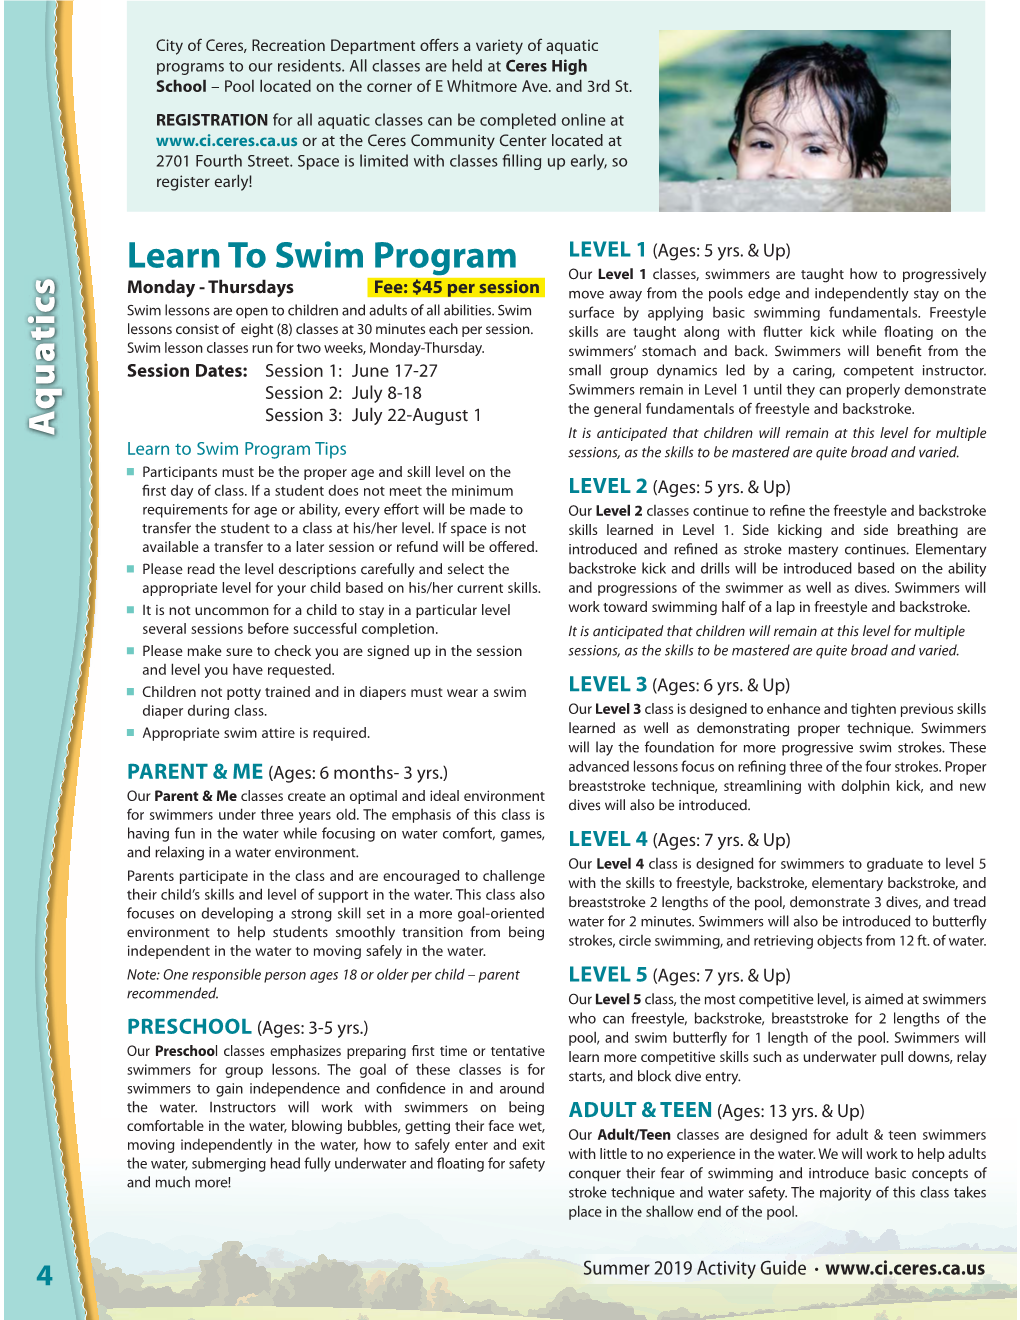 Learn to Swim Program a Qua Tics